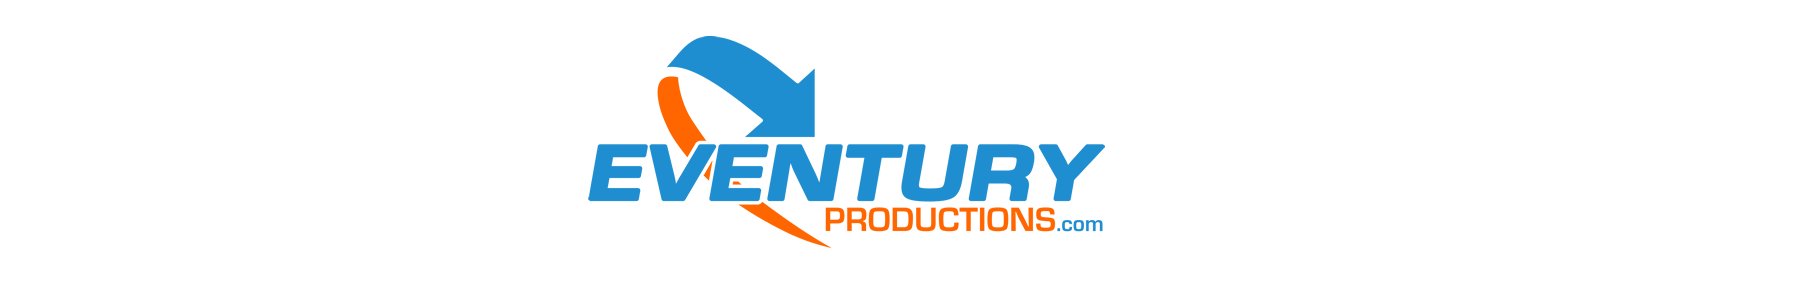 Eventury Productions logo